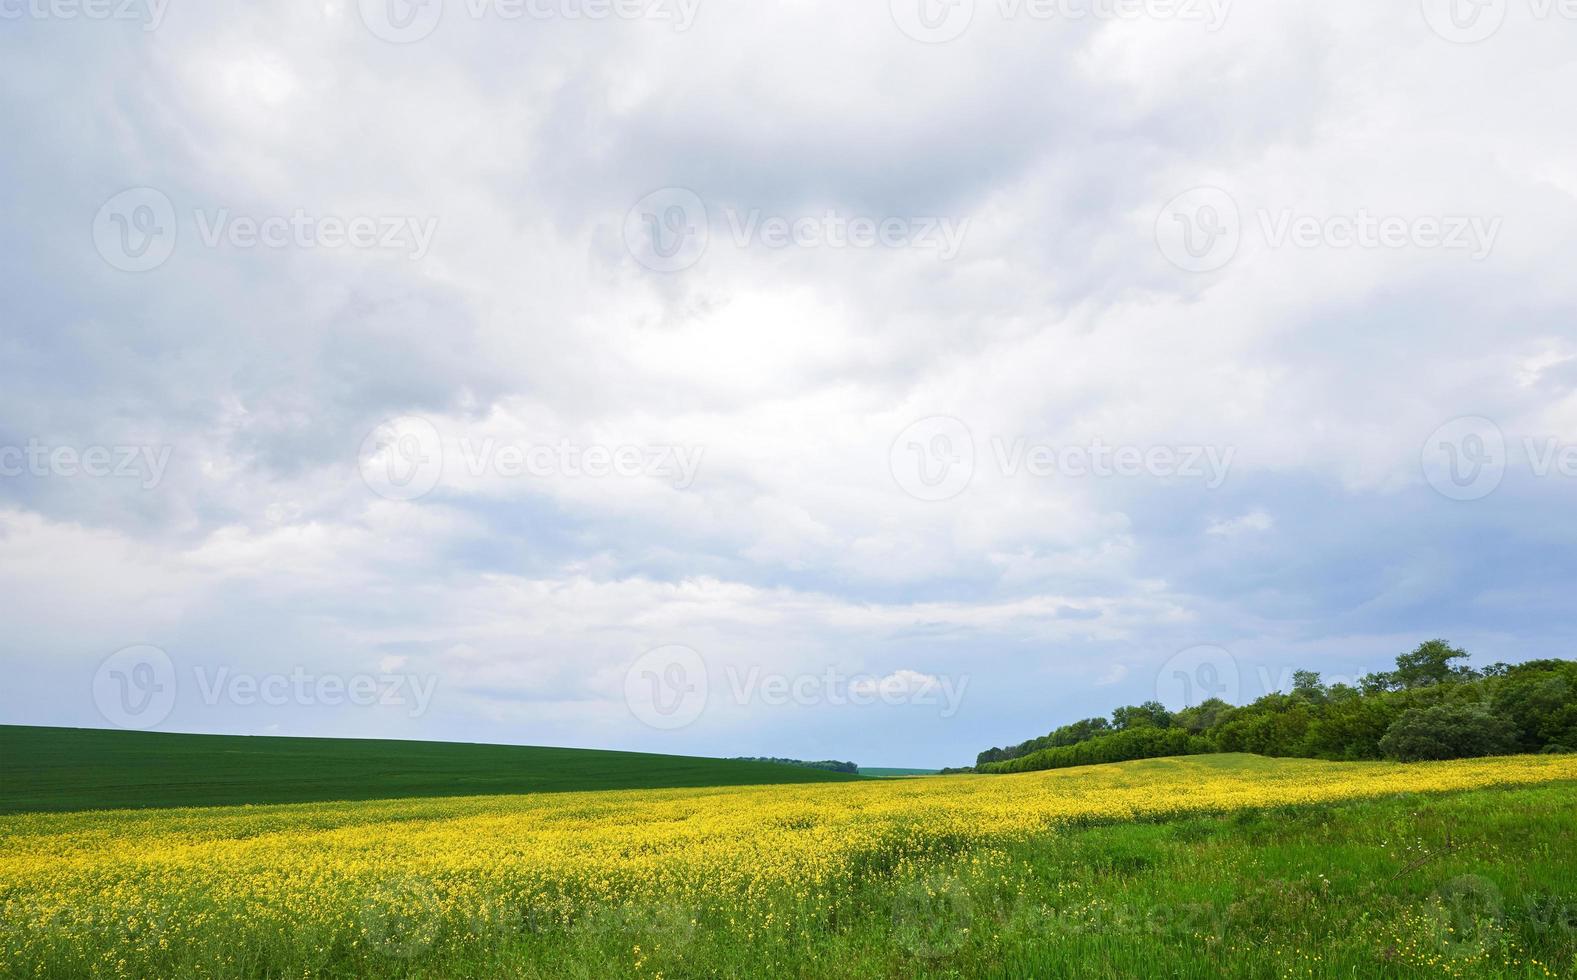 campo de colza amarela brilhante na primavera. colza brassica napus semente de óleo de colza foto